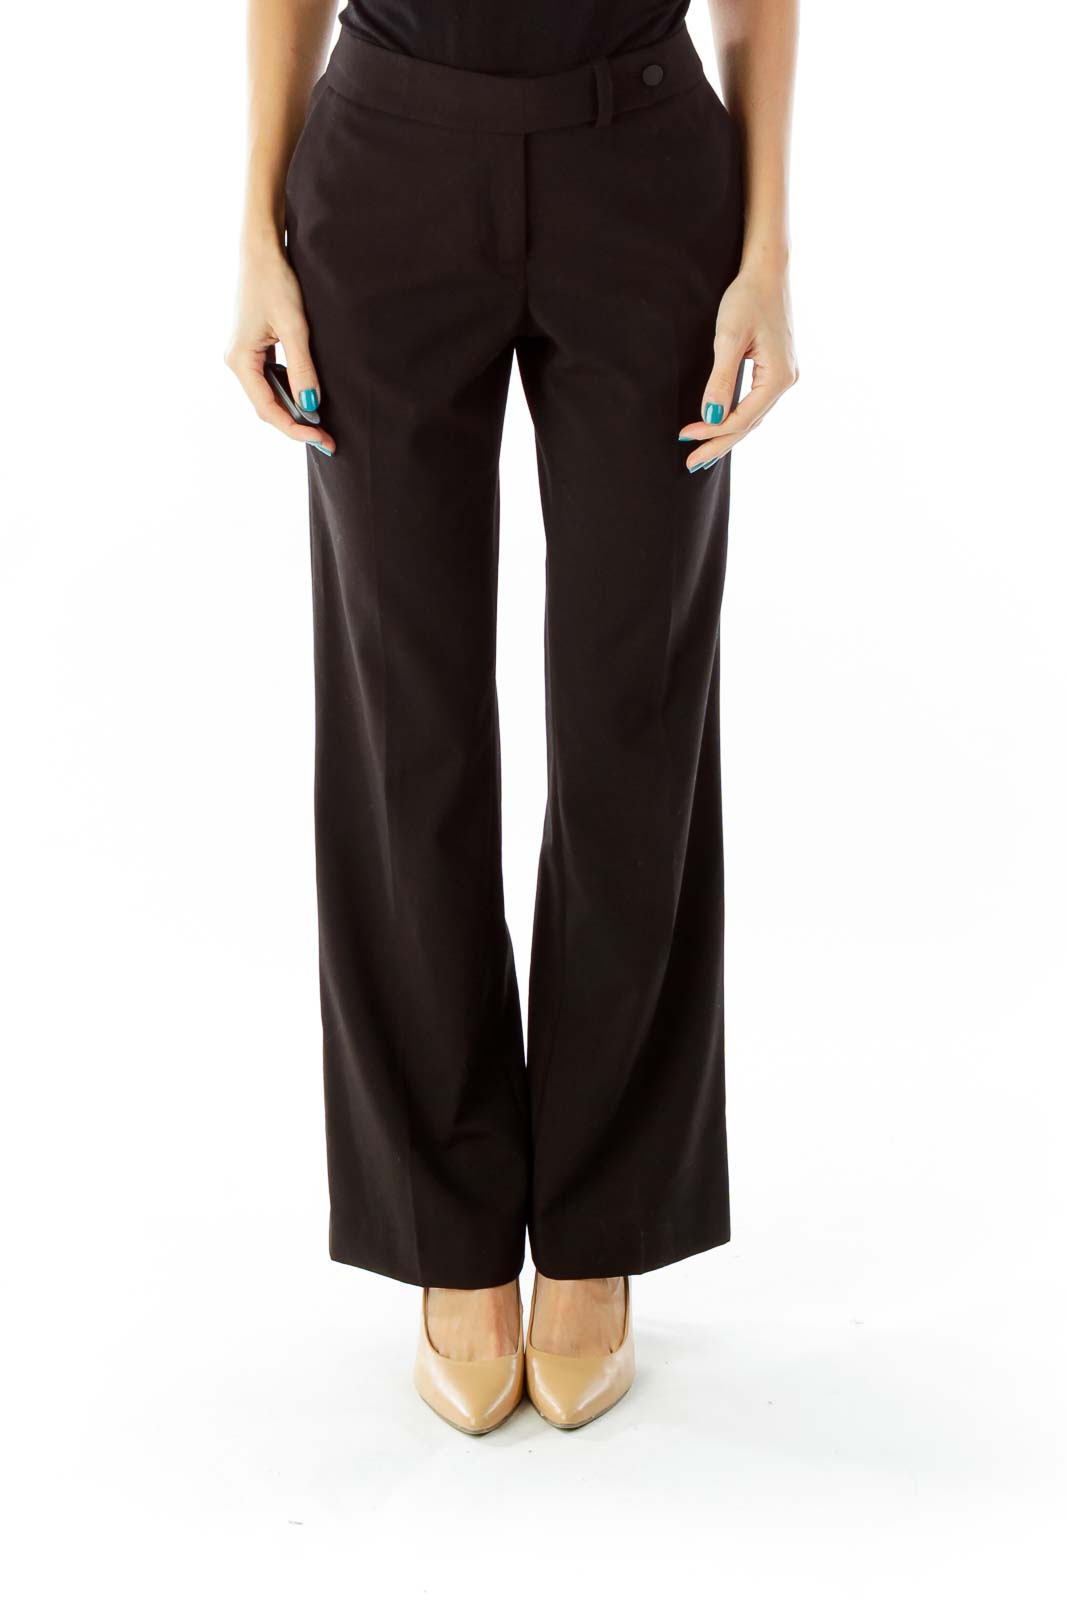 Calvin Klein - Black Straight-Leg Pants Rayon Polyester Spandex | SilkRoll